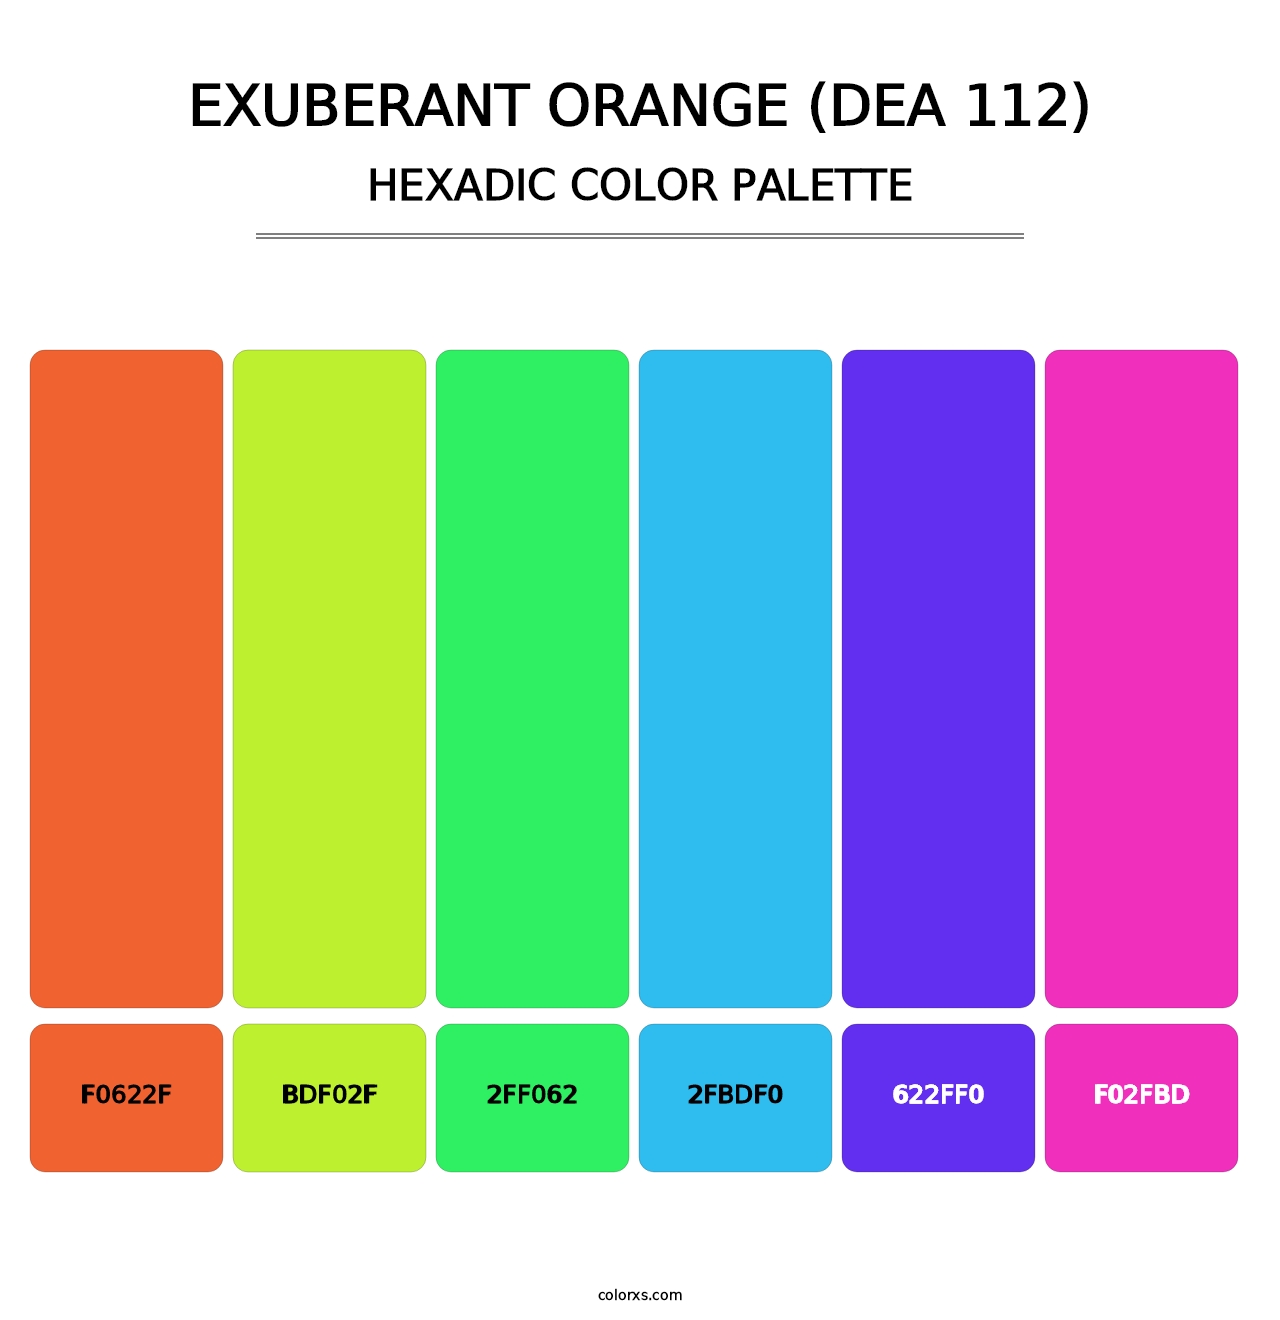 Exuberant Orange (DEA 112) - Hexadic Color Palette